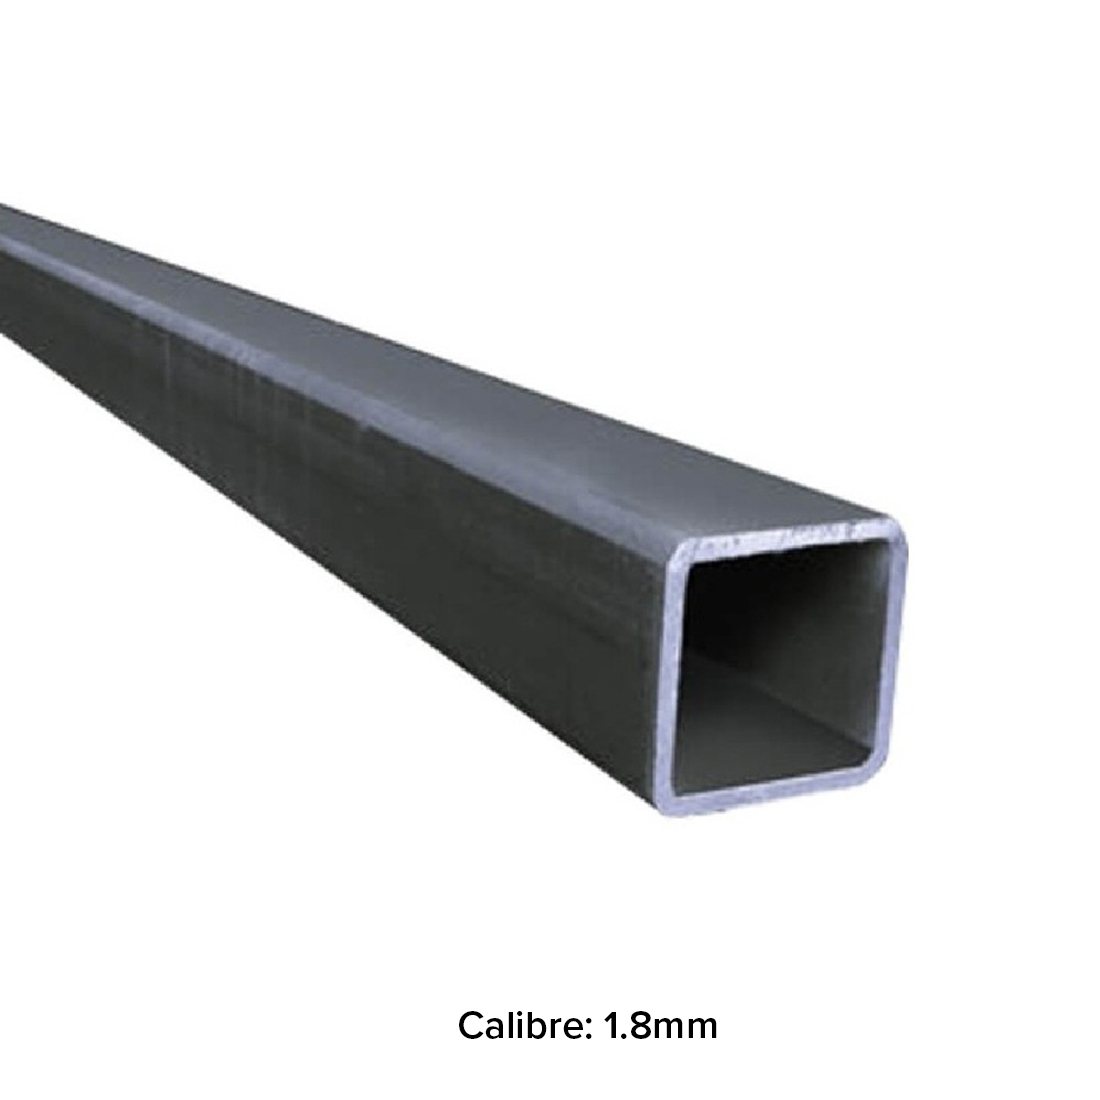 Tubo estructural galvanizado acero calibre 1.8mm 50x50x5.8m